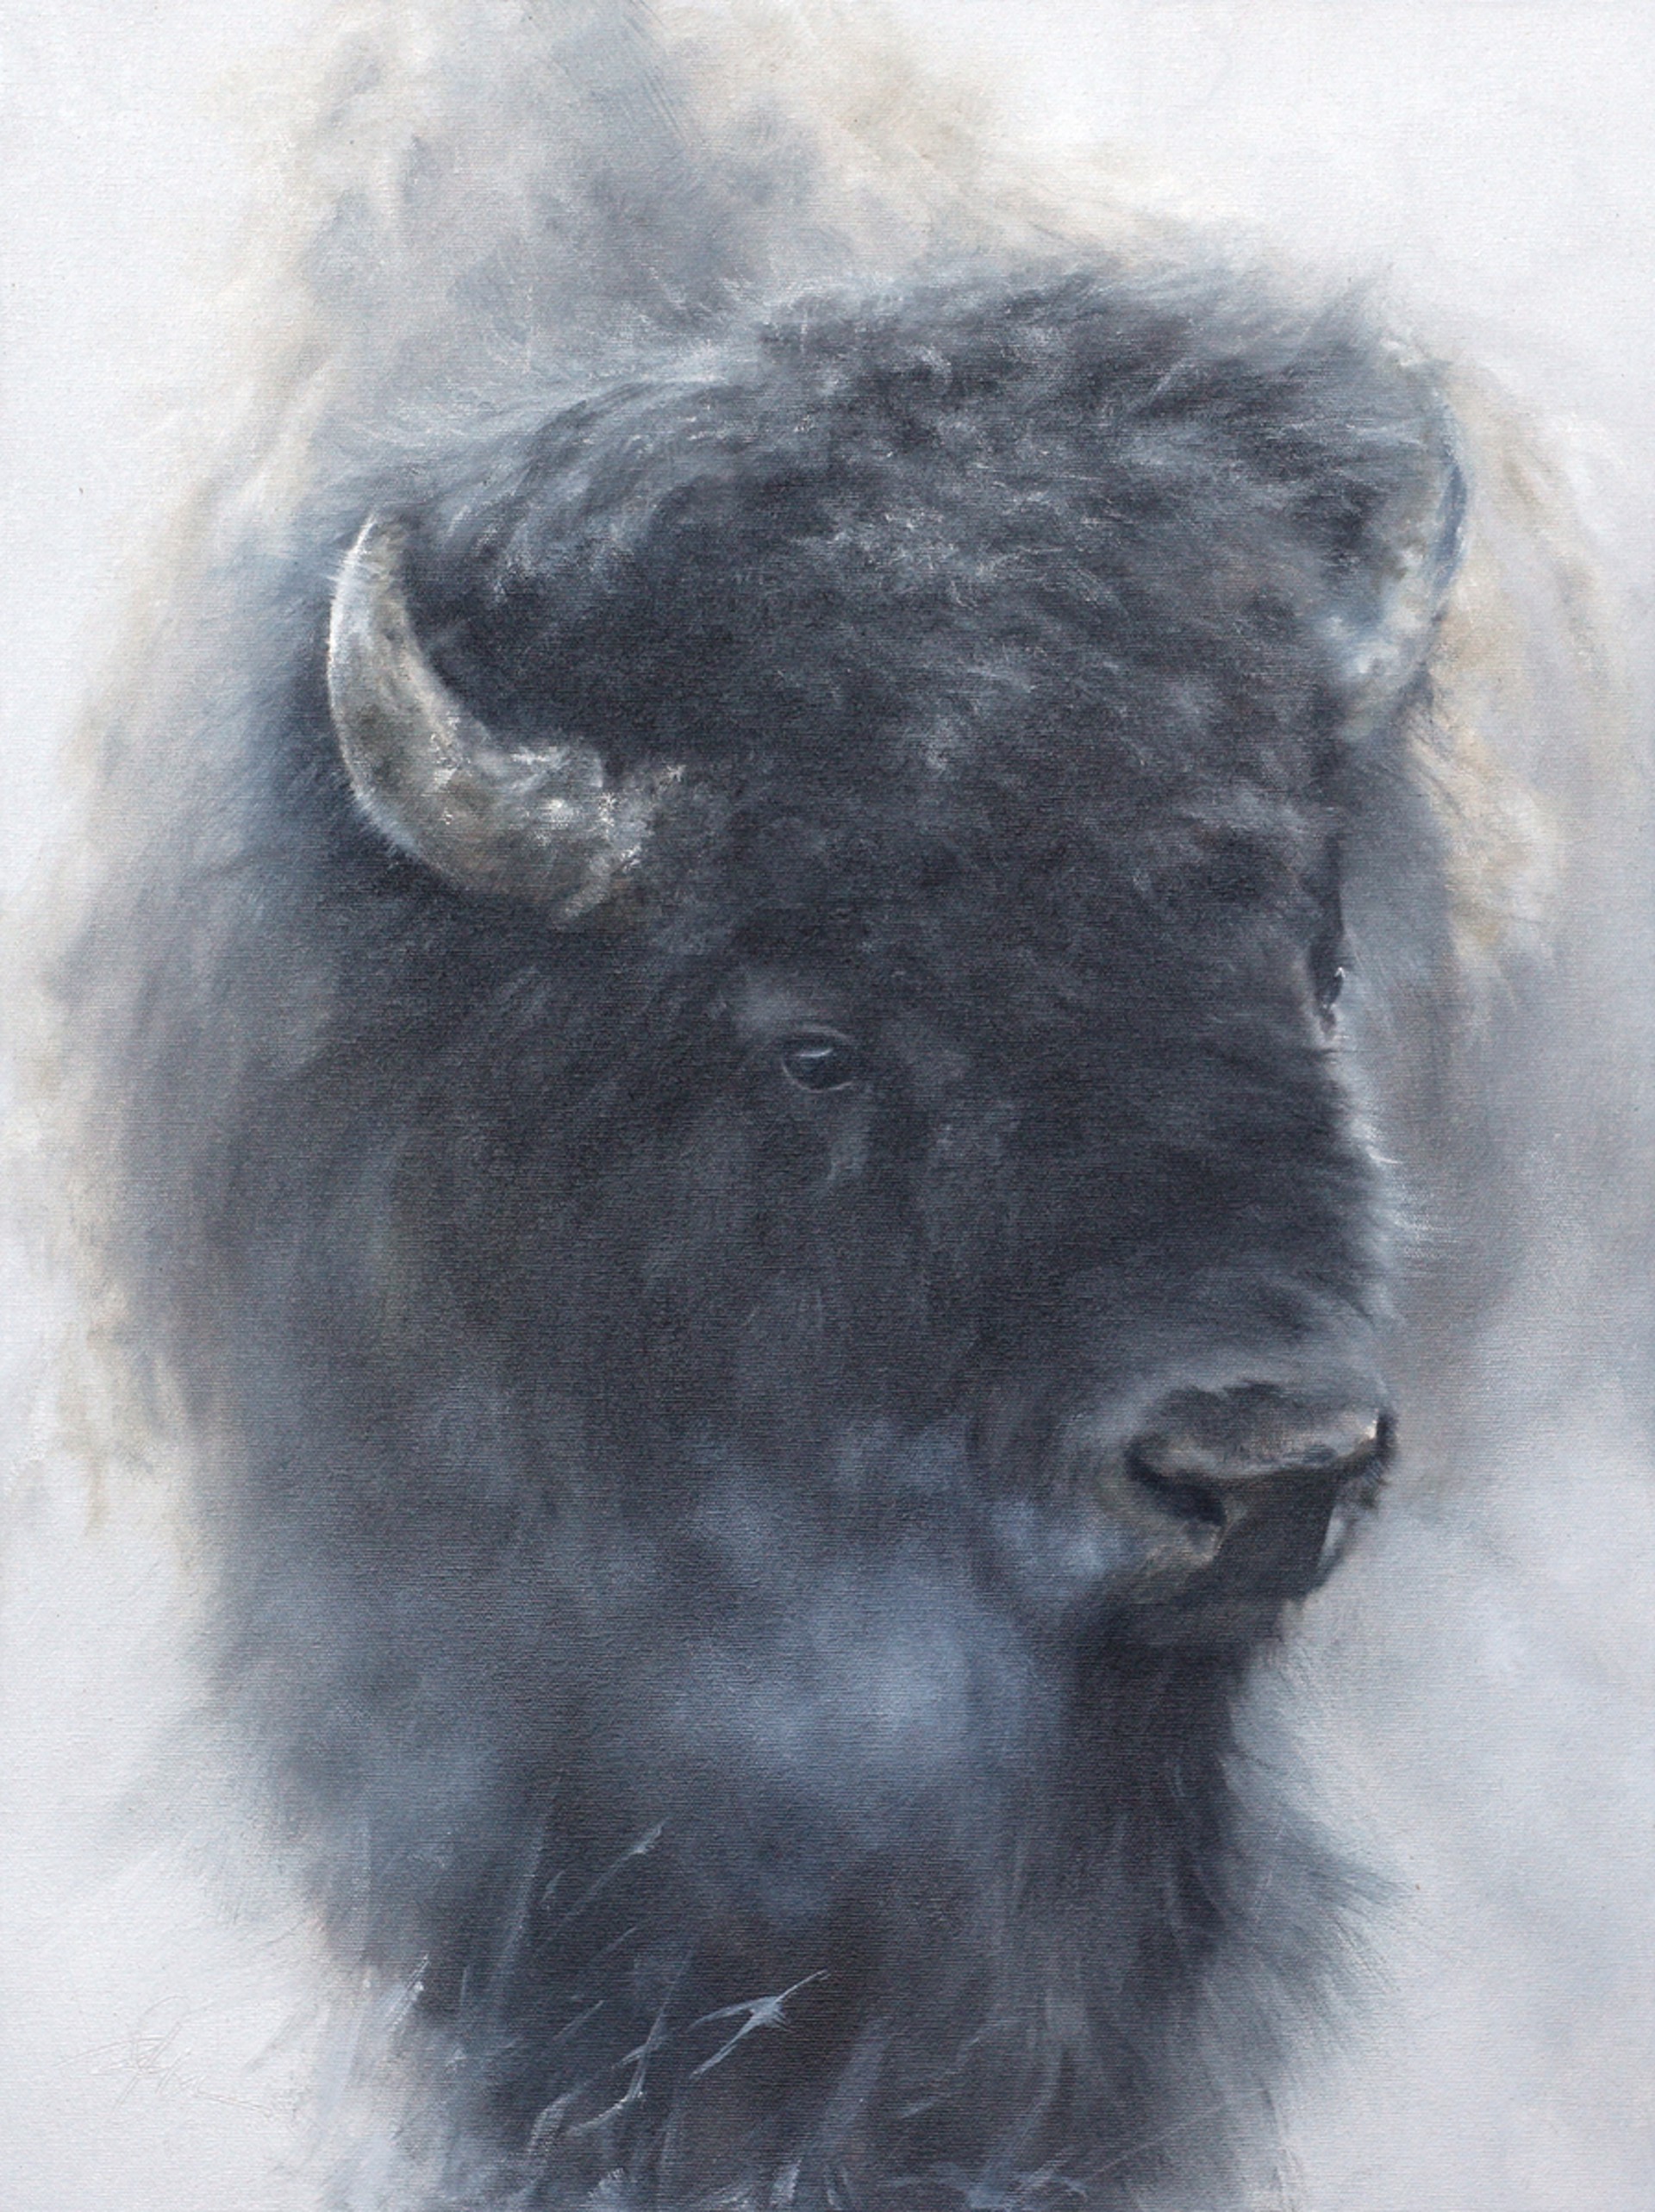 Bison In A Winter Landscape Black And White Close Up Portrait